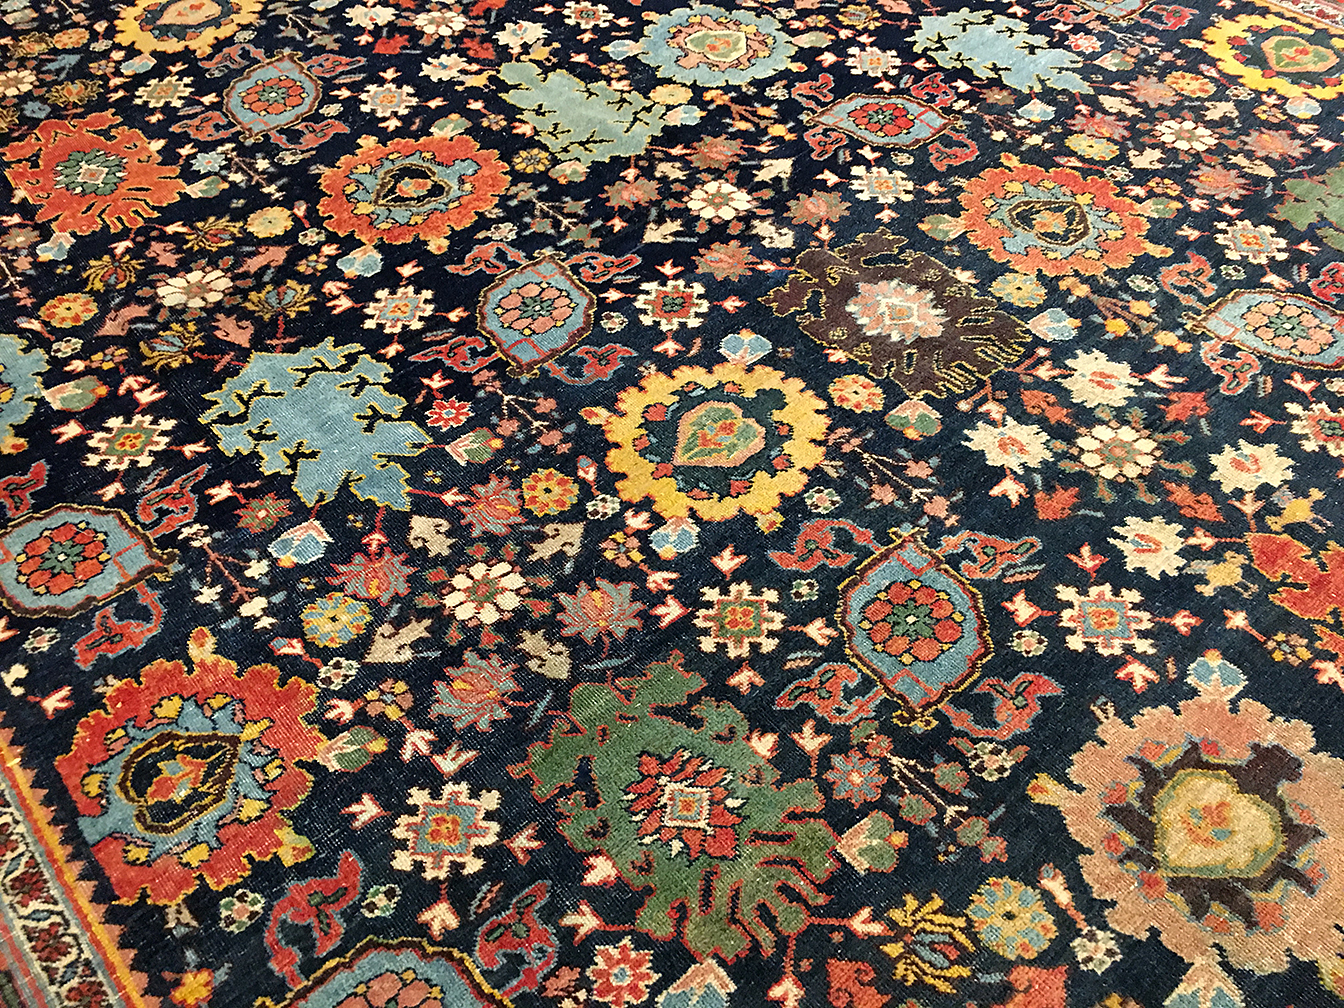 Antique tabriz Carpet - # 80078